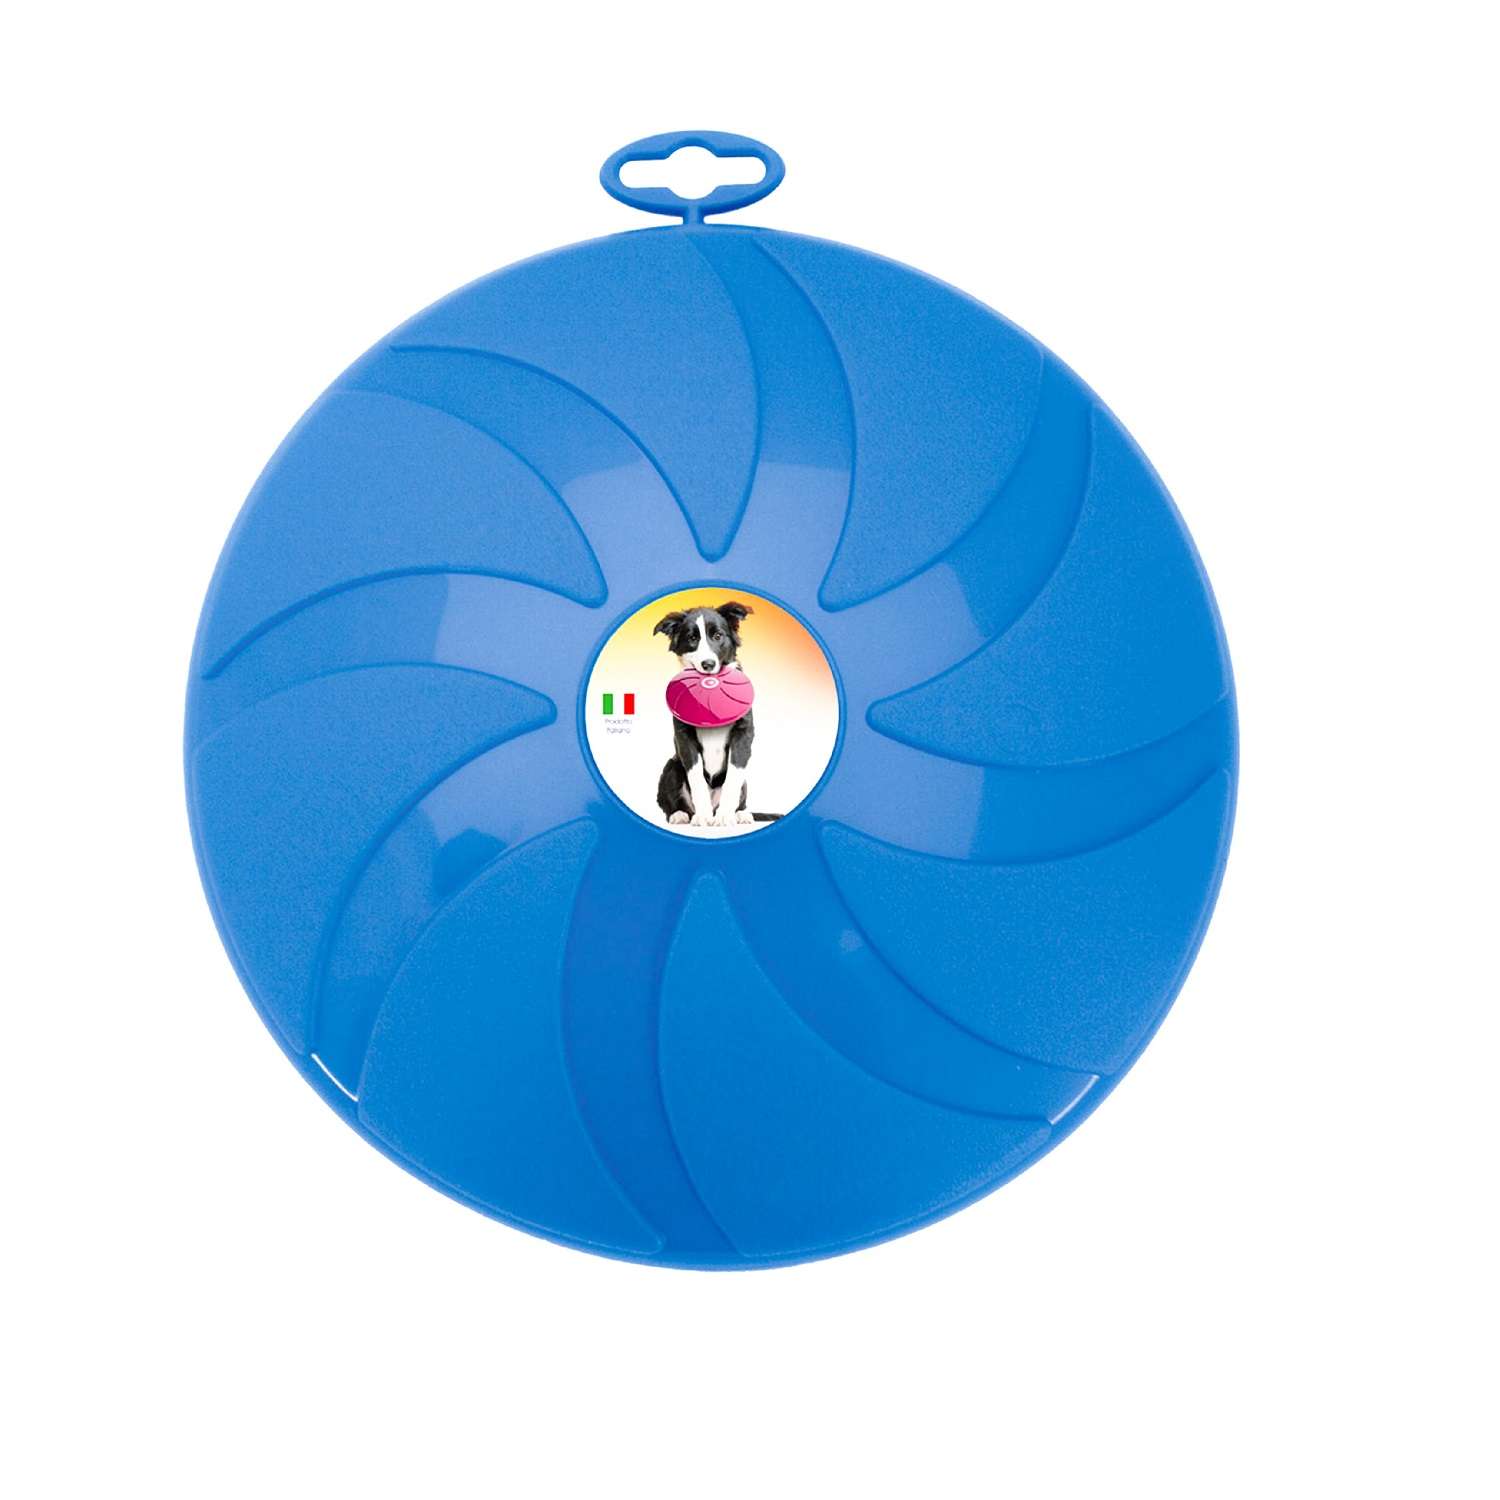 Игрушка для собак фрисби Lilli Pet Frisbee magic аппорт пуллер для собак - фото 1